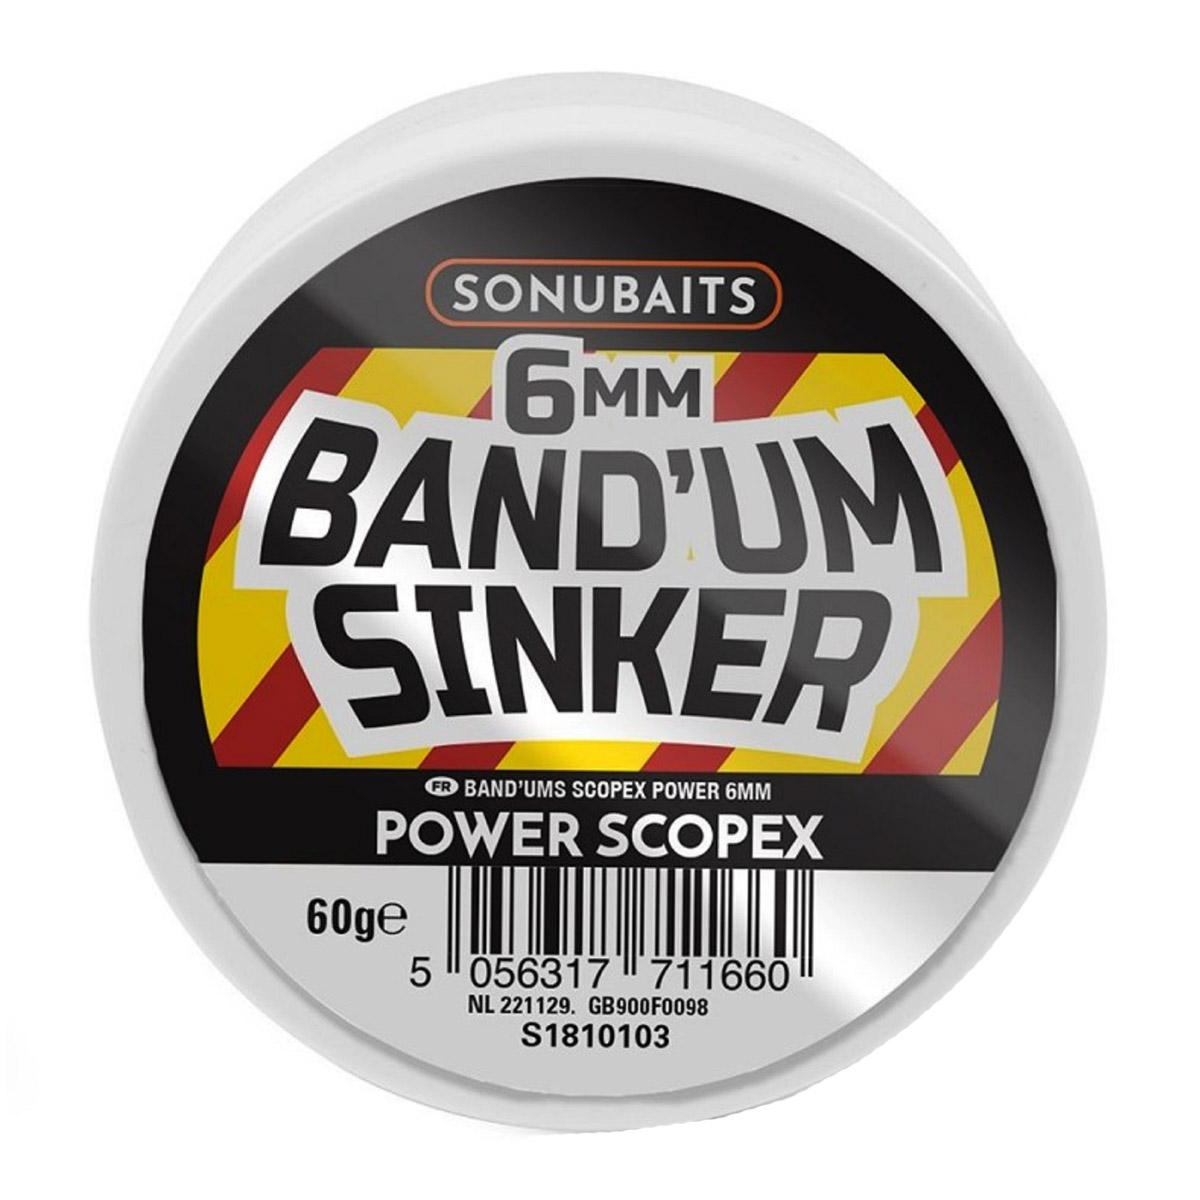 Sonubaits Band'um Sinker Power Scopex